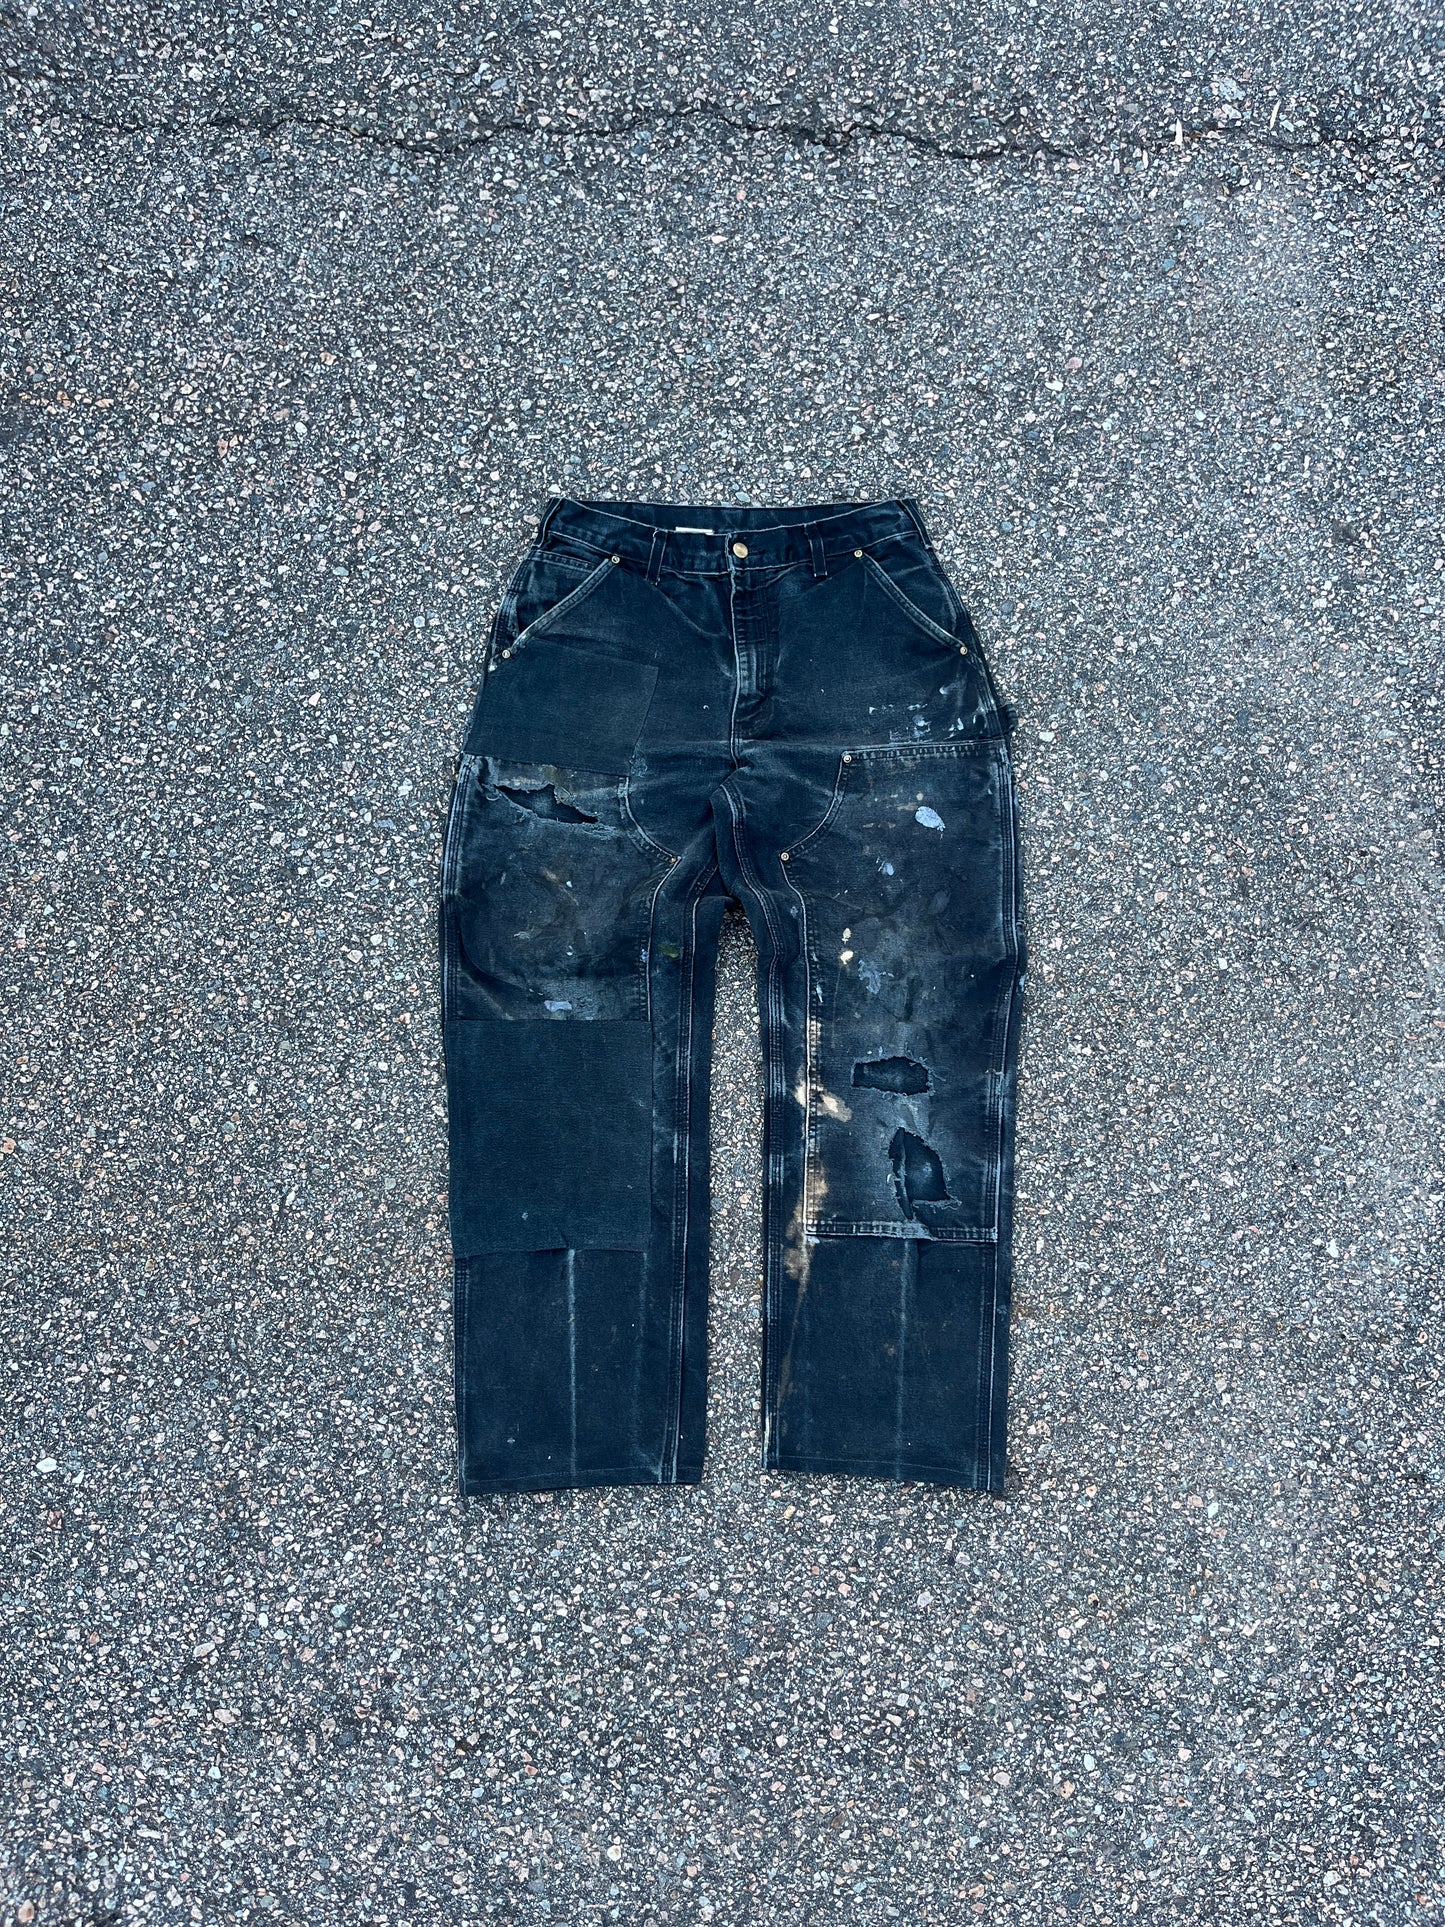 Faded n Distressed Black Carhartt Double Knee Pants - 30 x 28.5